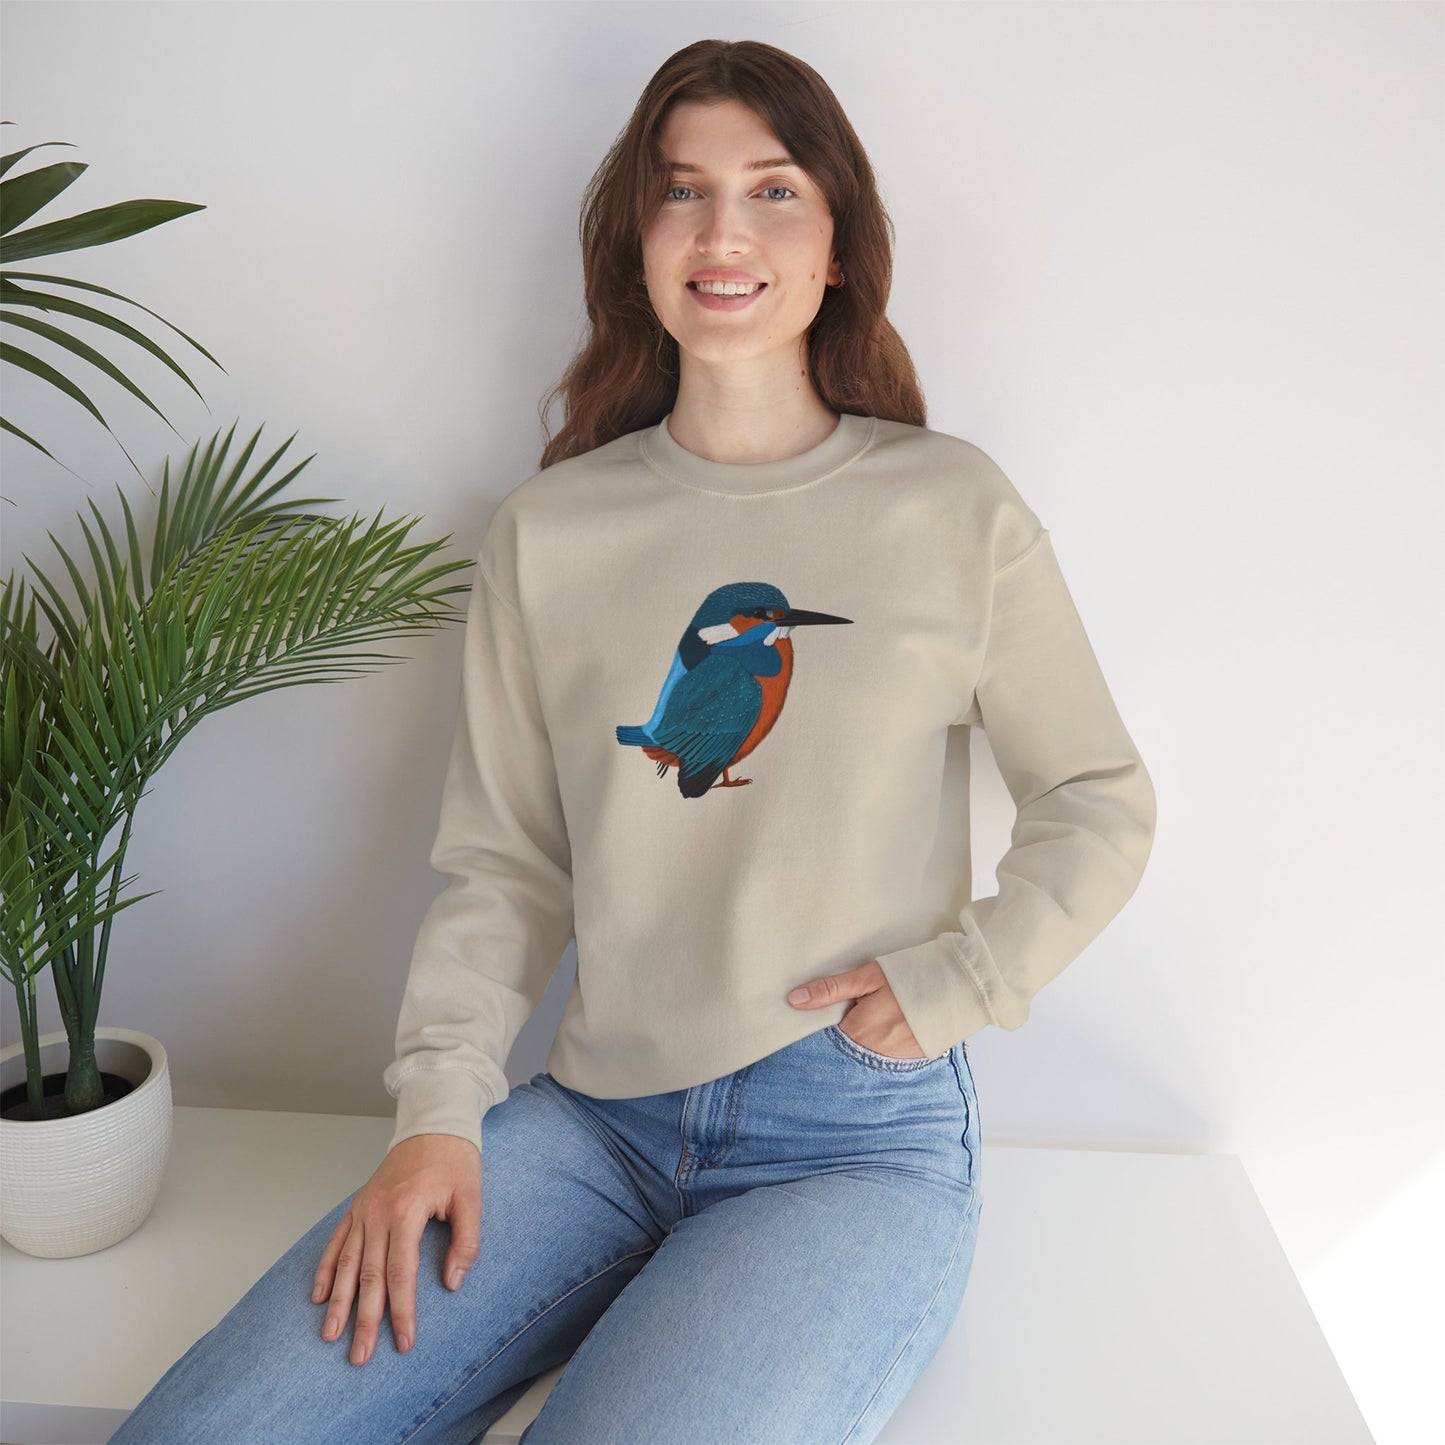 Kingfisher Bird Watcher Biologist Crewneck Sweatshirt